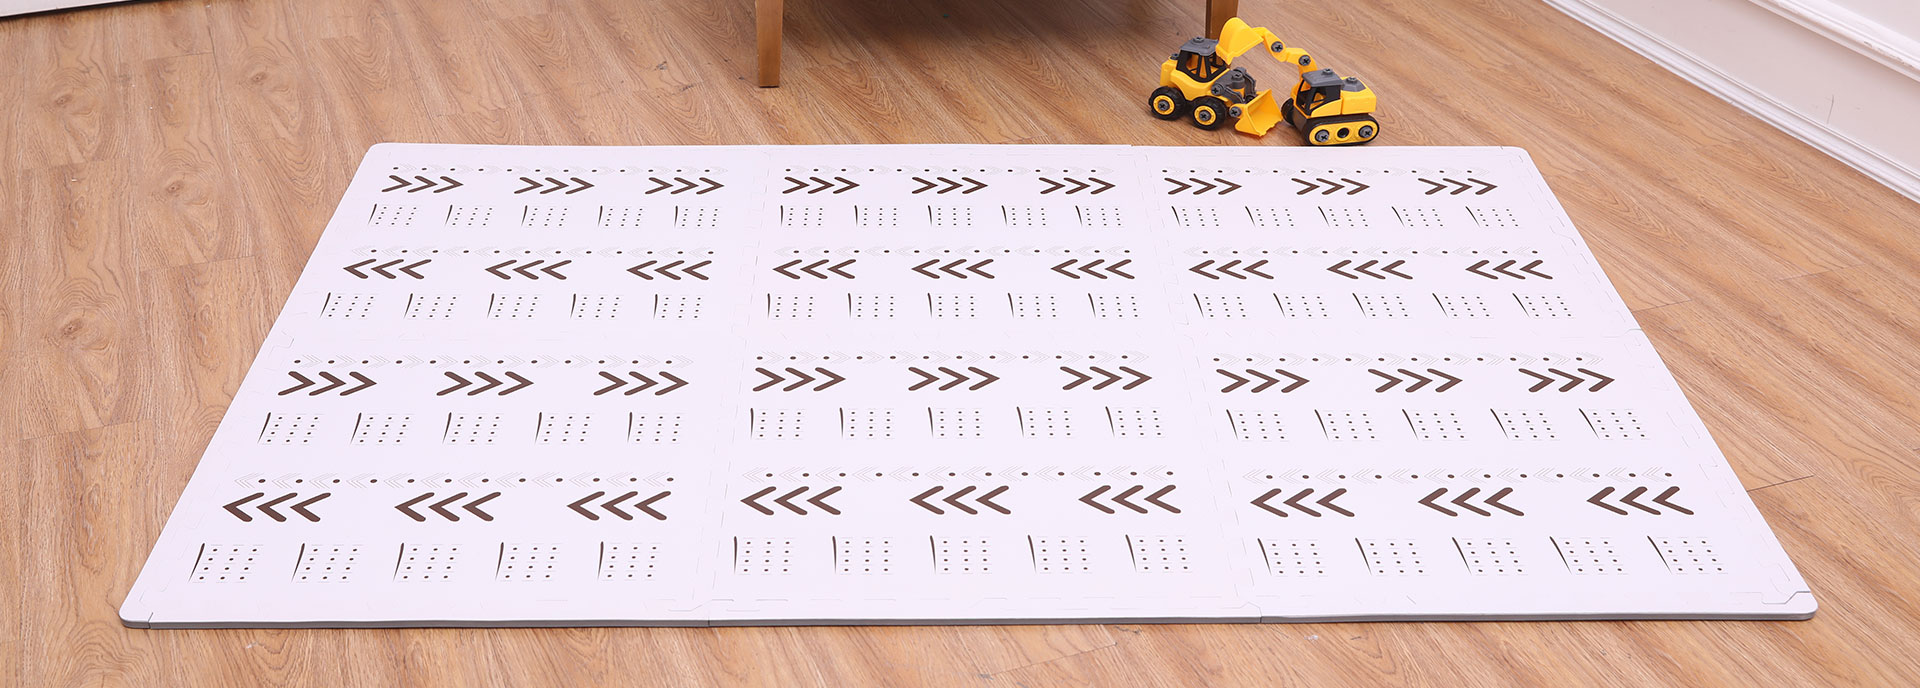 Eva Foam Interlocking/Jigsaw/Puzzle Floor Playmats/Tiles Wholesale